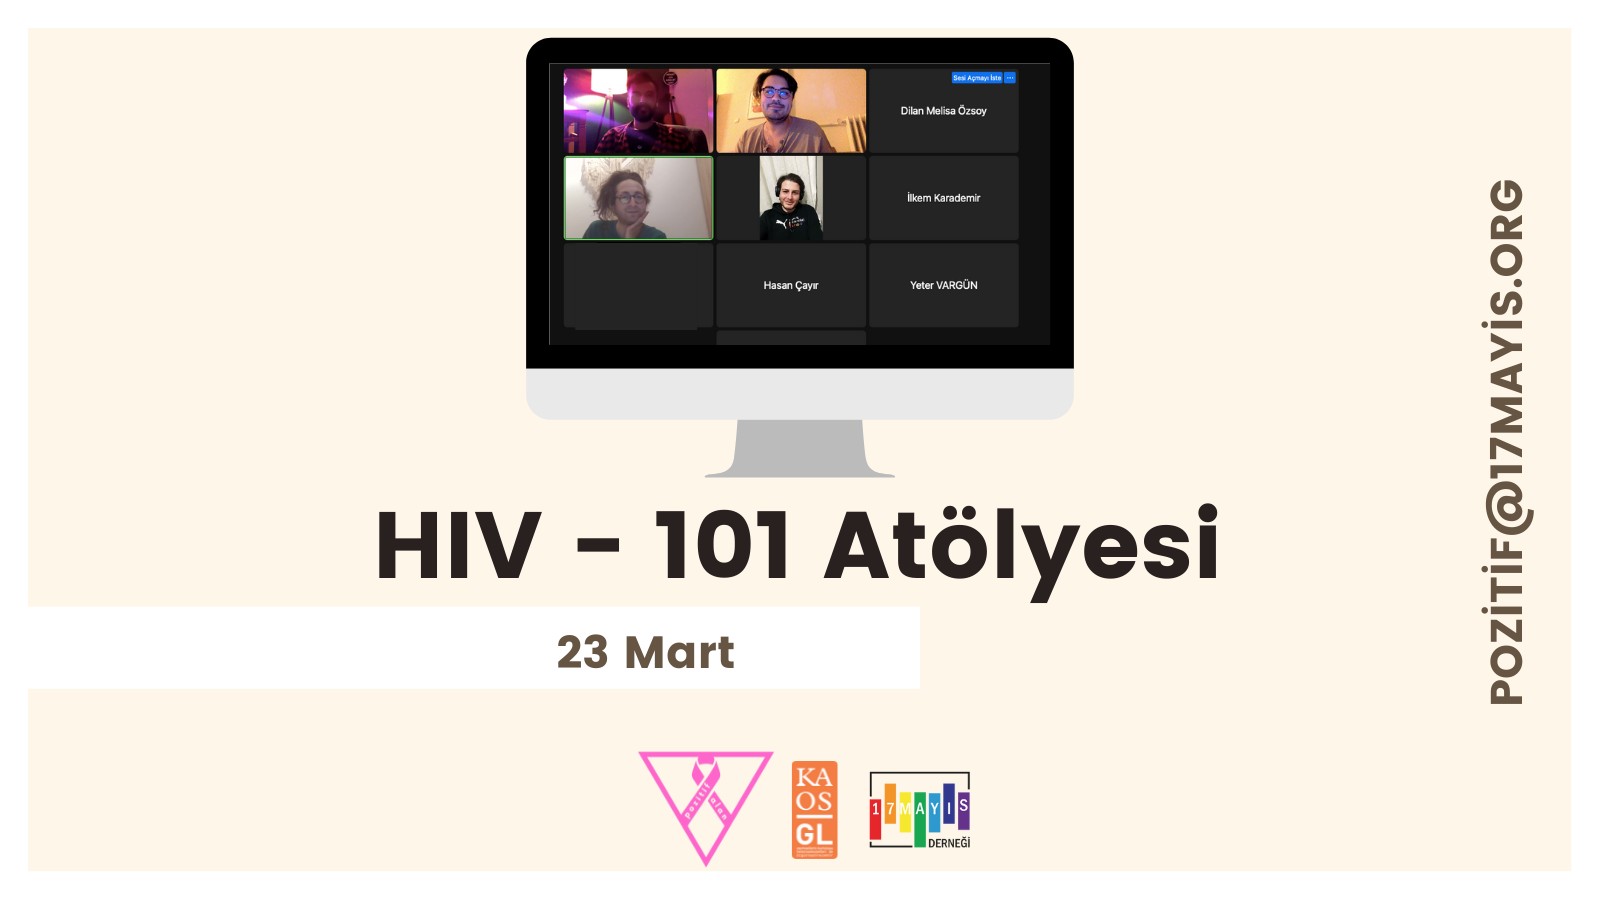 17 Mayıs Derneği HIV 101 Atölyesi’ni tamamladı Kaos GL - LGBTİ+ Haber Portalı